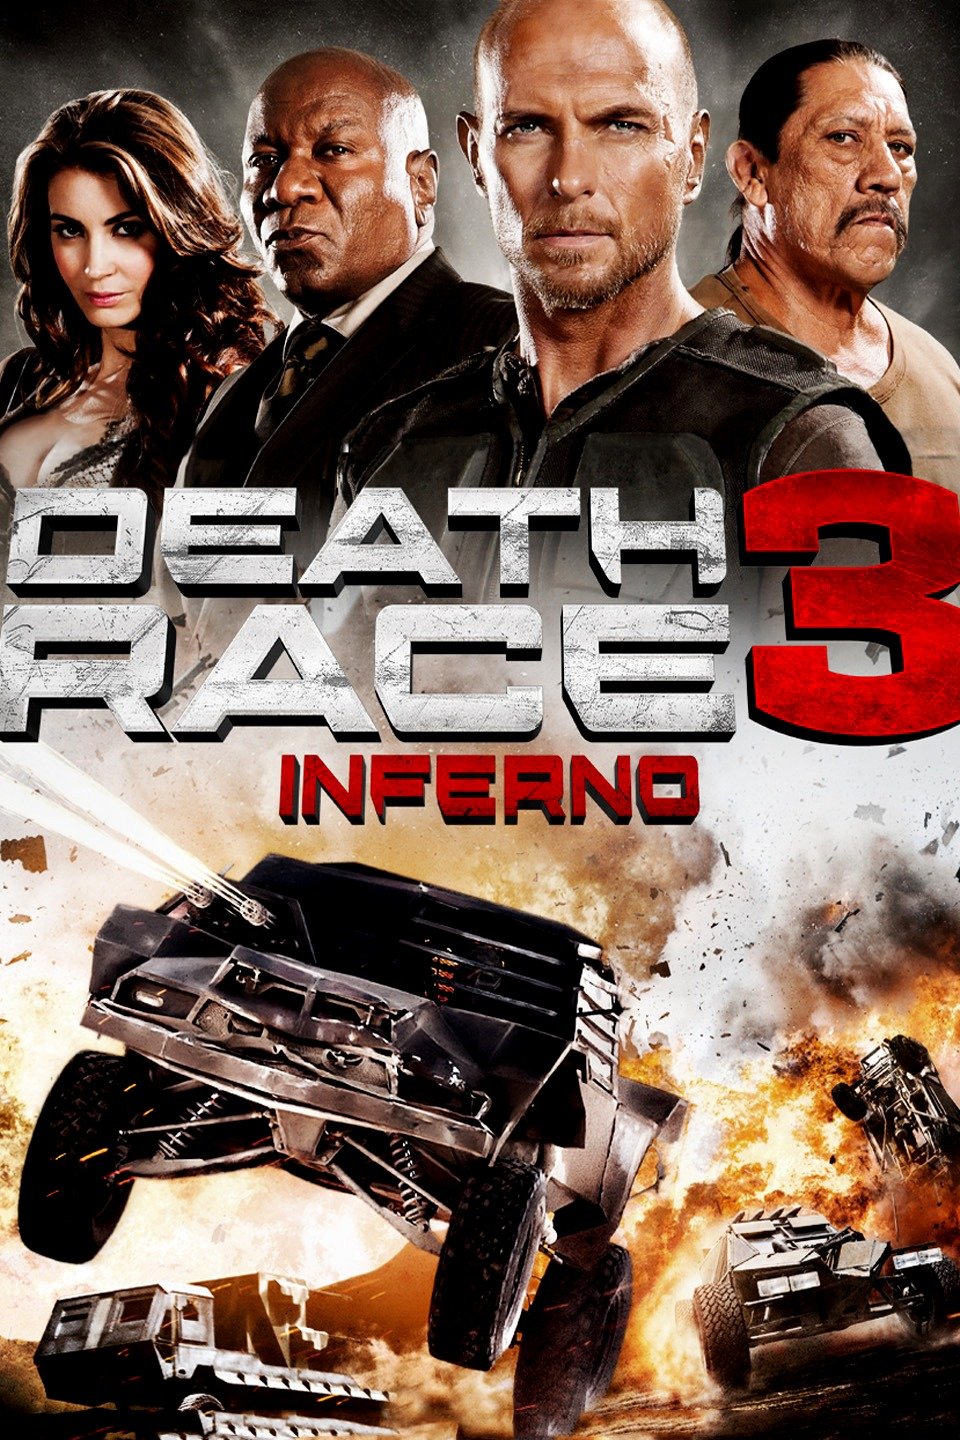 [MINI-HD] Death Race: Inferno (2013) ซิ่งสั่งตาย 3 : ซิ่งสู่นรก [1080p] [พากย์ไทย DTS + อังกฤษ DTS] [บรรยายไทย + อังกฤษ] [เสียงไทย + ซับไทย] [ONE2UP]